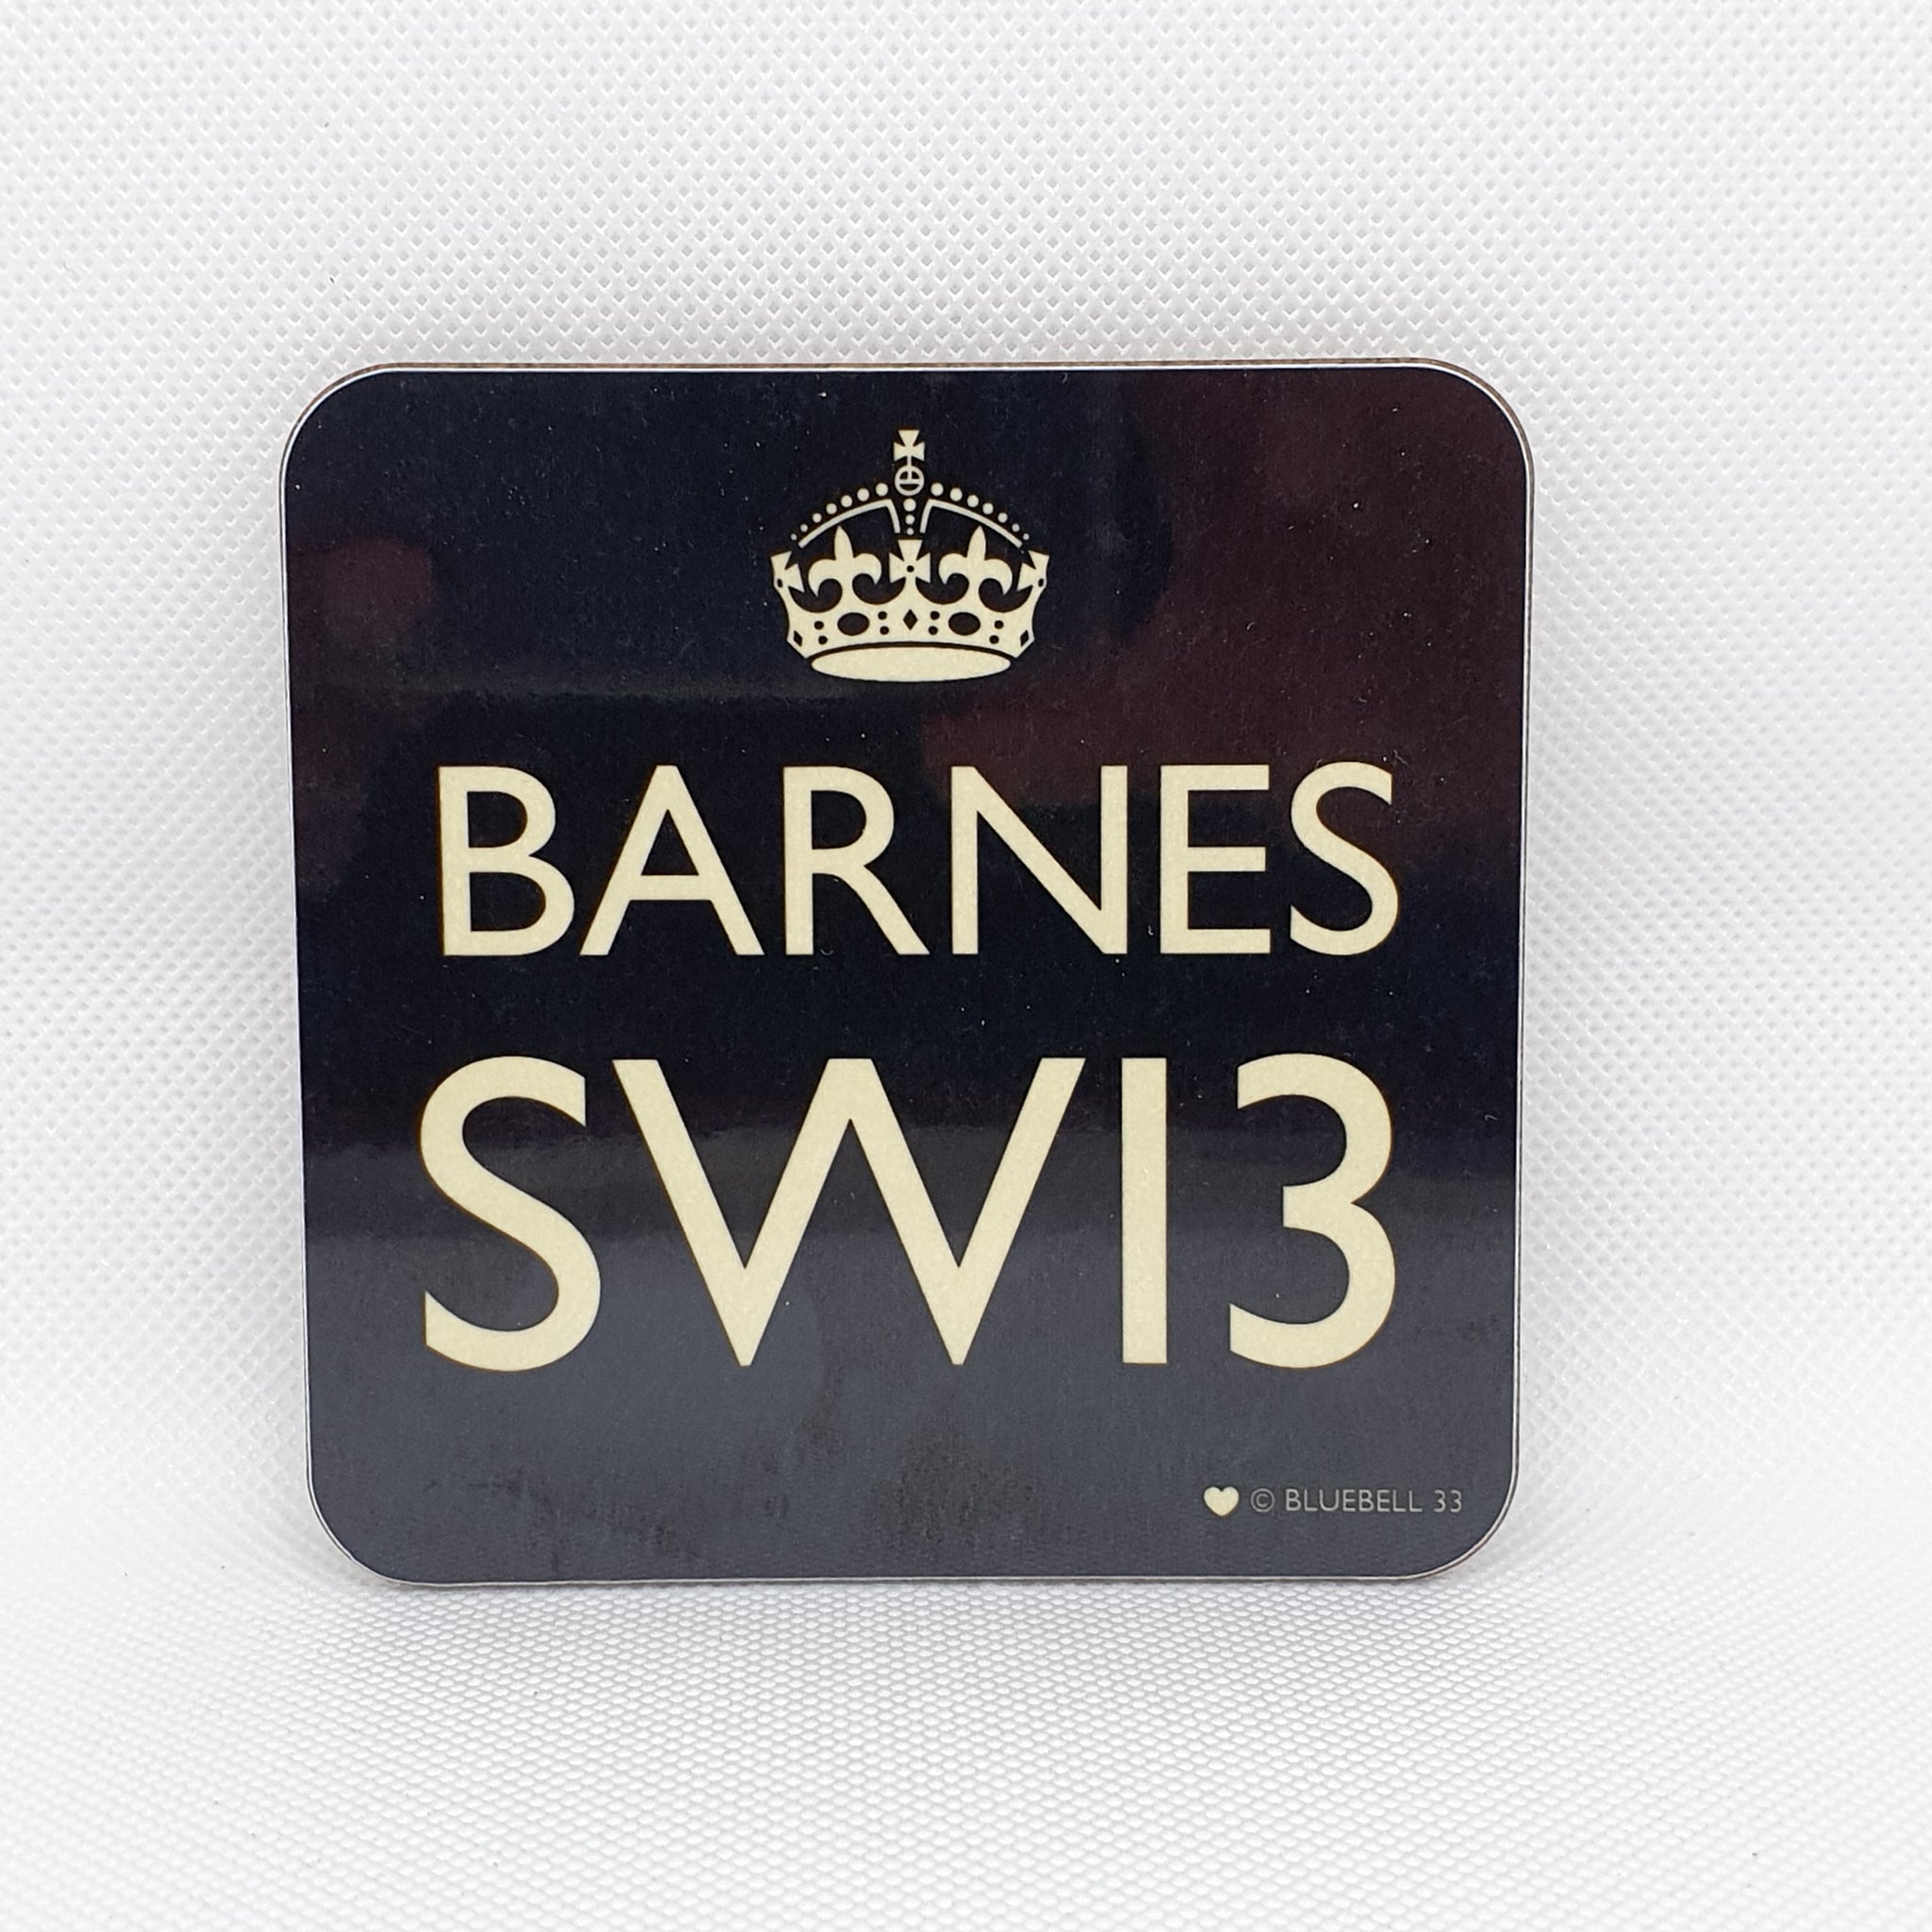 Barnes SW13 Coaster